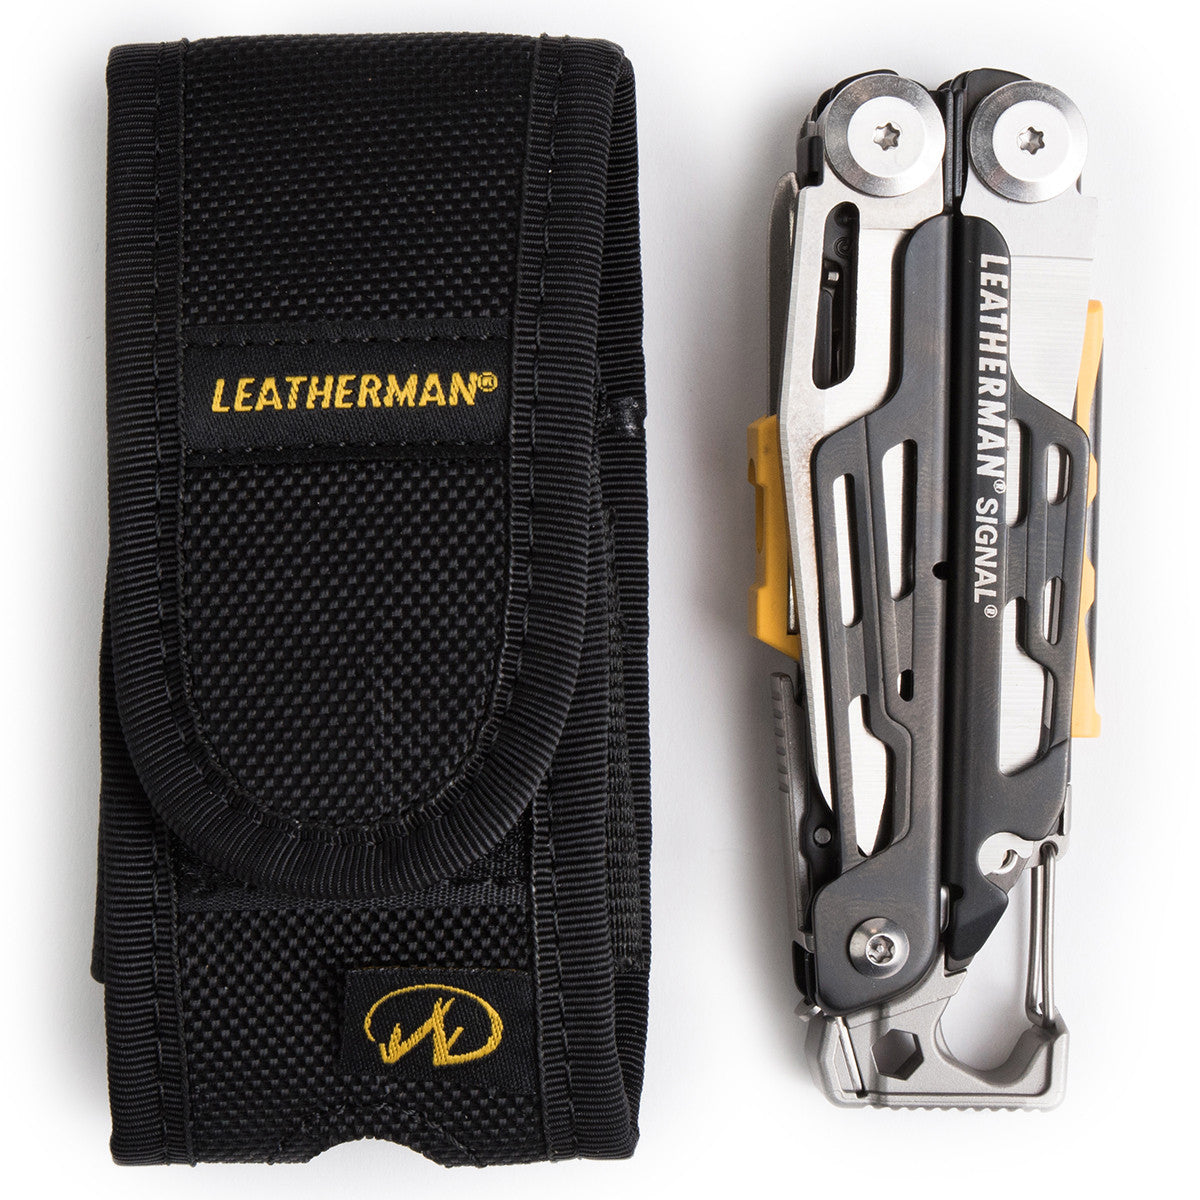 Leatherman Signal MultiTool Teal - Smoky Mountain Knife Works